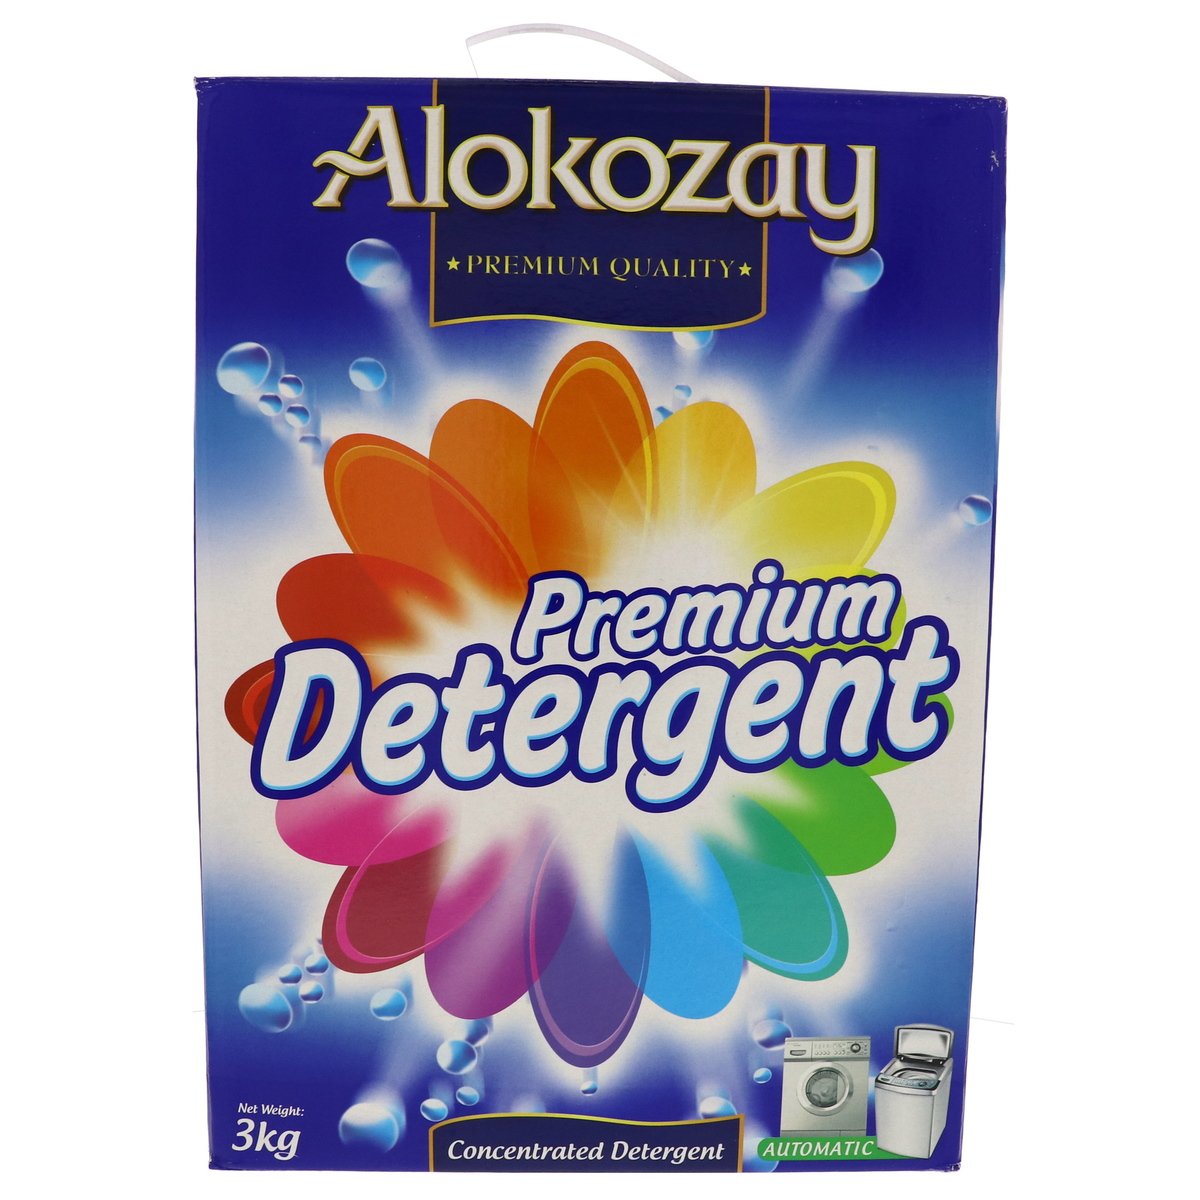 Alokozay Automatic Premium Detergent Powder 3kg